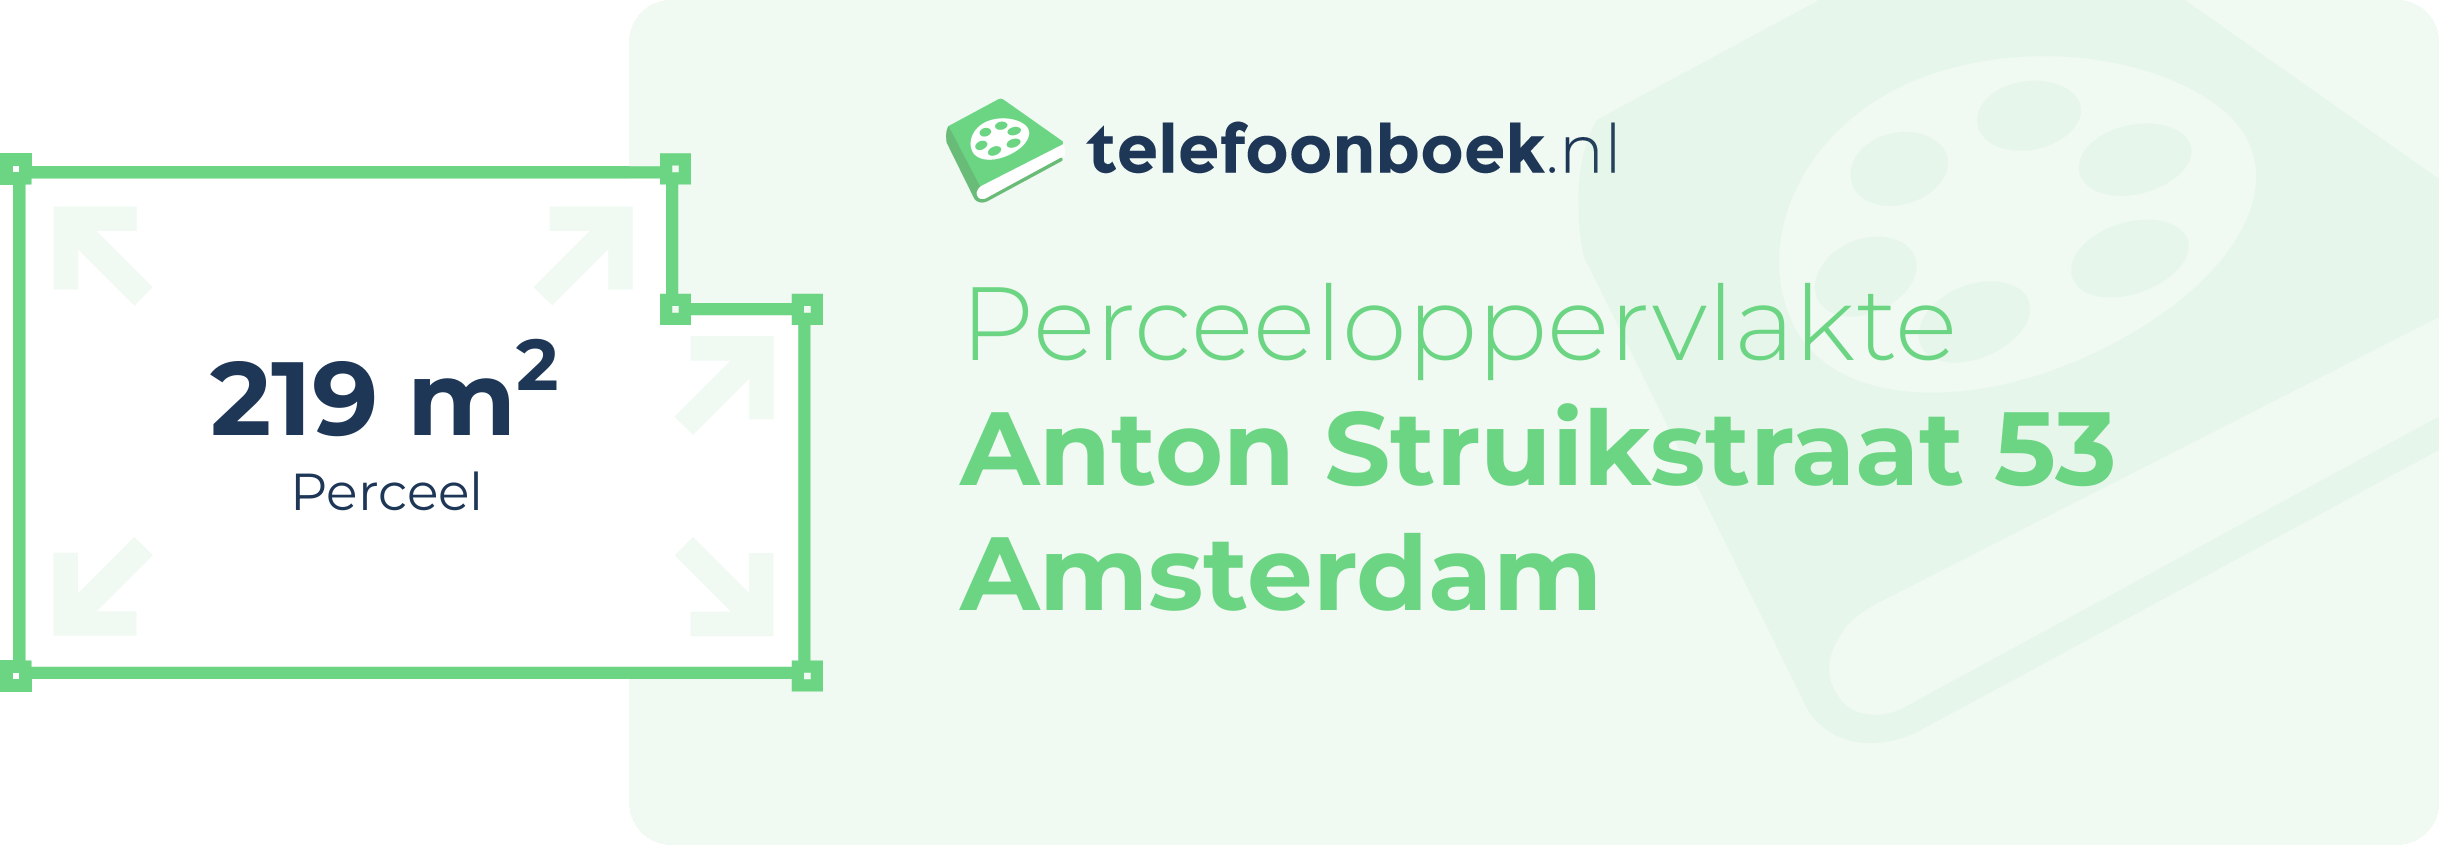 Perceeloppervlakte Anton Struikstraat 53 Amsterdam